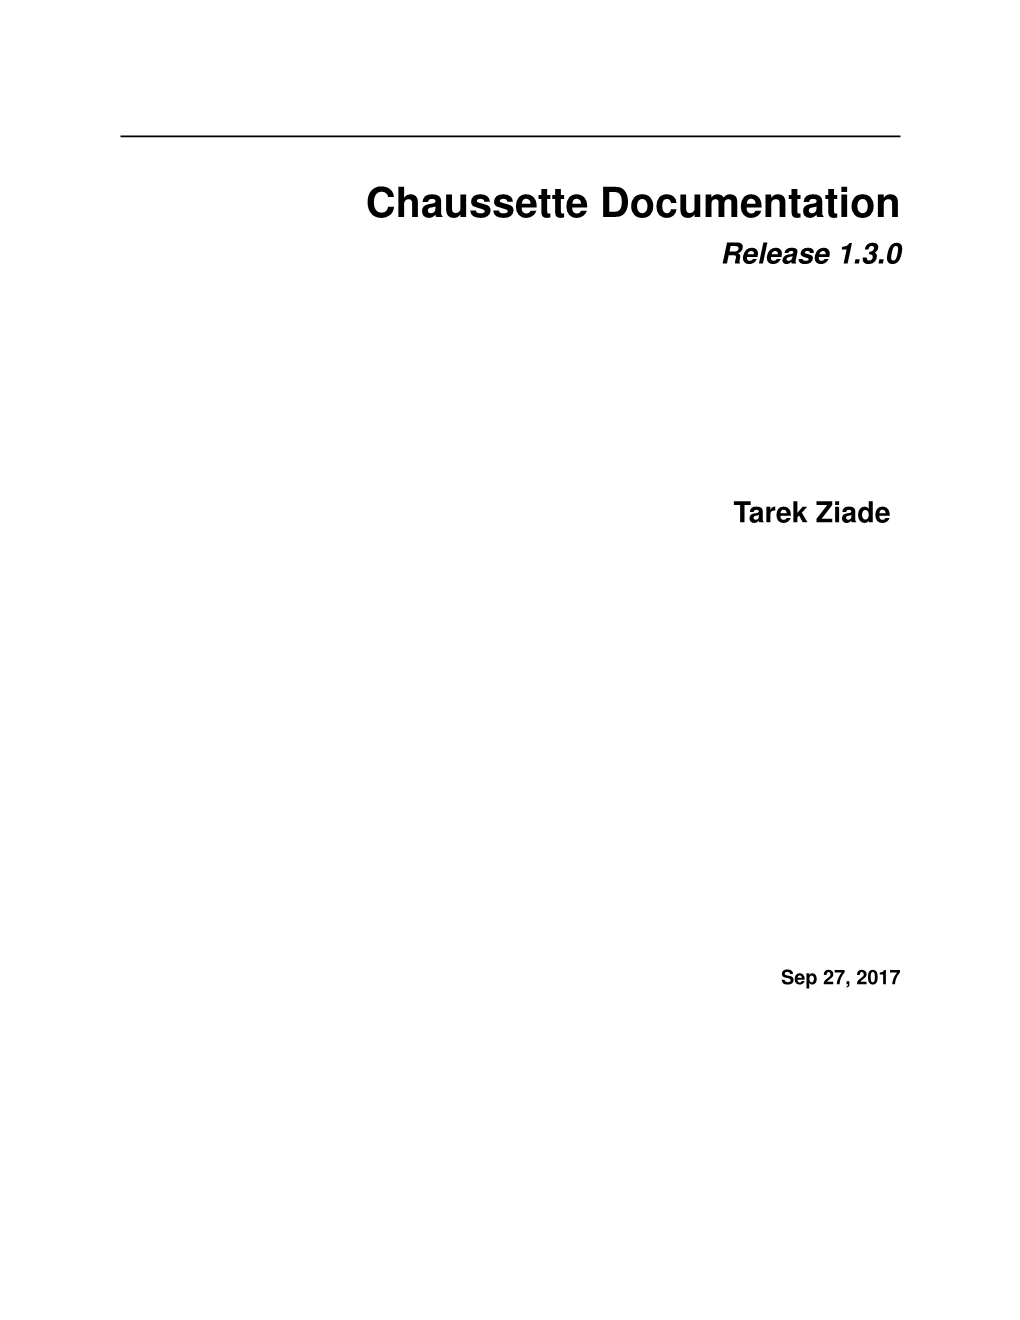 Chaussette Documentation Release 1.3.0